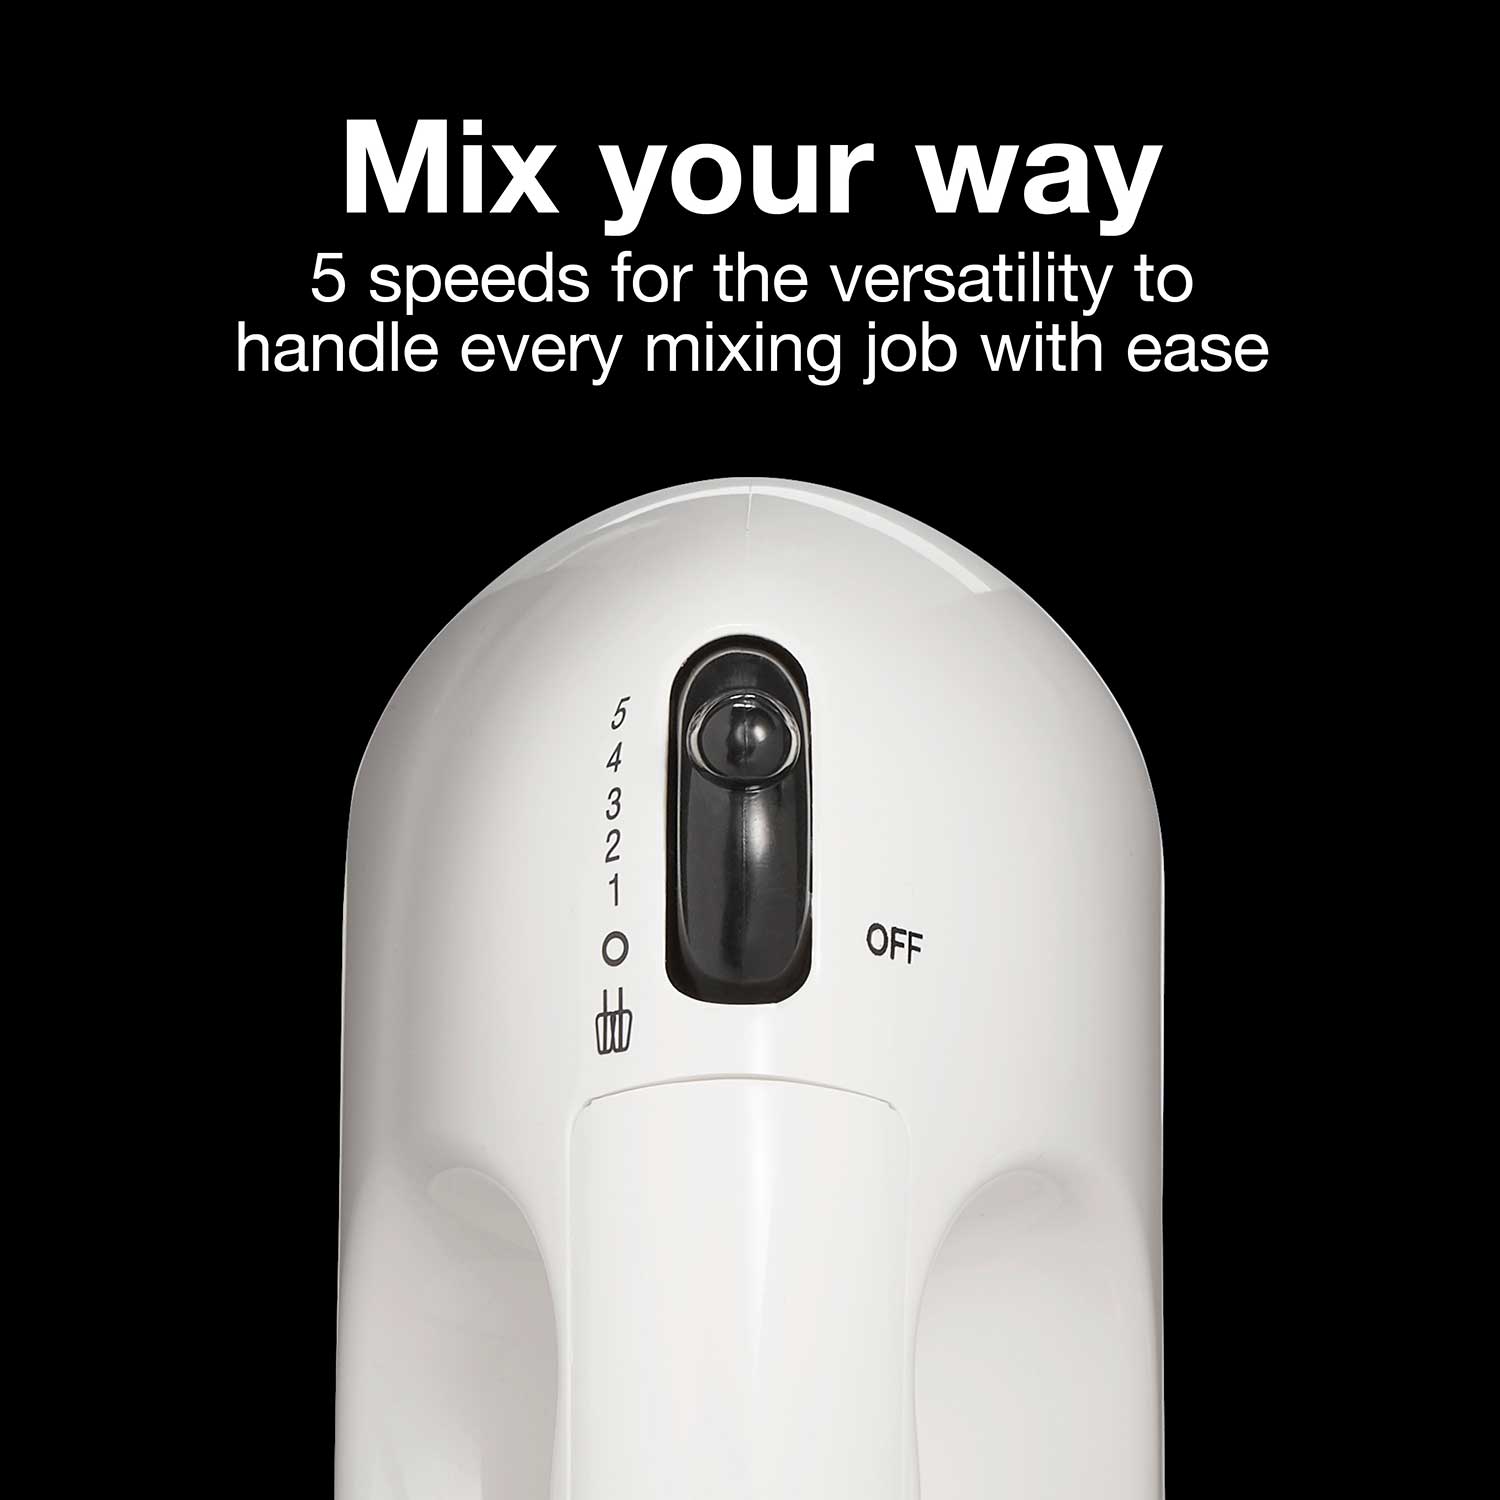 Proctor Silex® Easy Mix 5-Speed Hand Mixer - Black, 62507PS